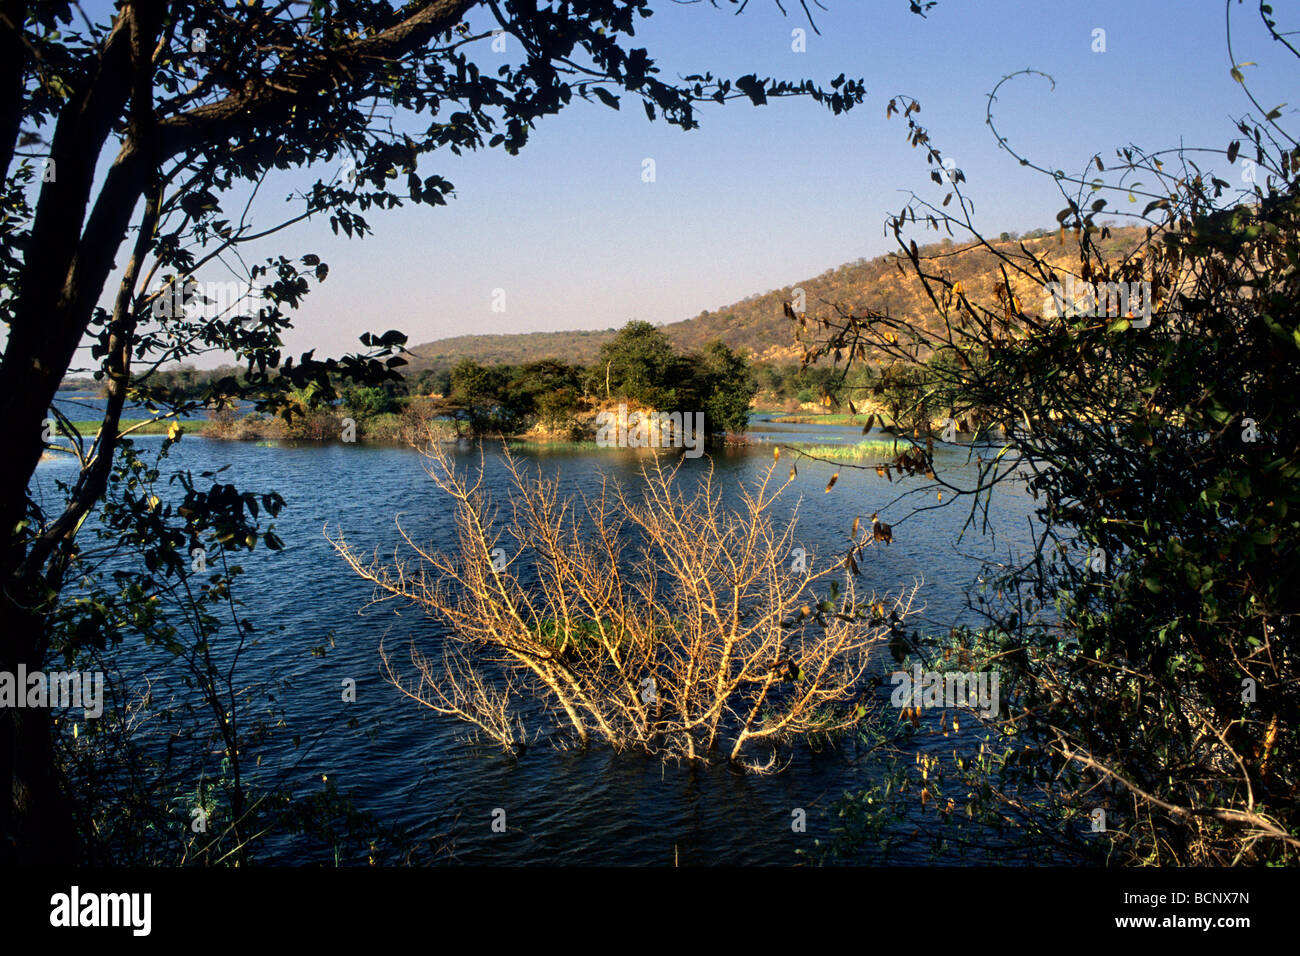 zimbabwe kariba lake Stock Photo